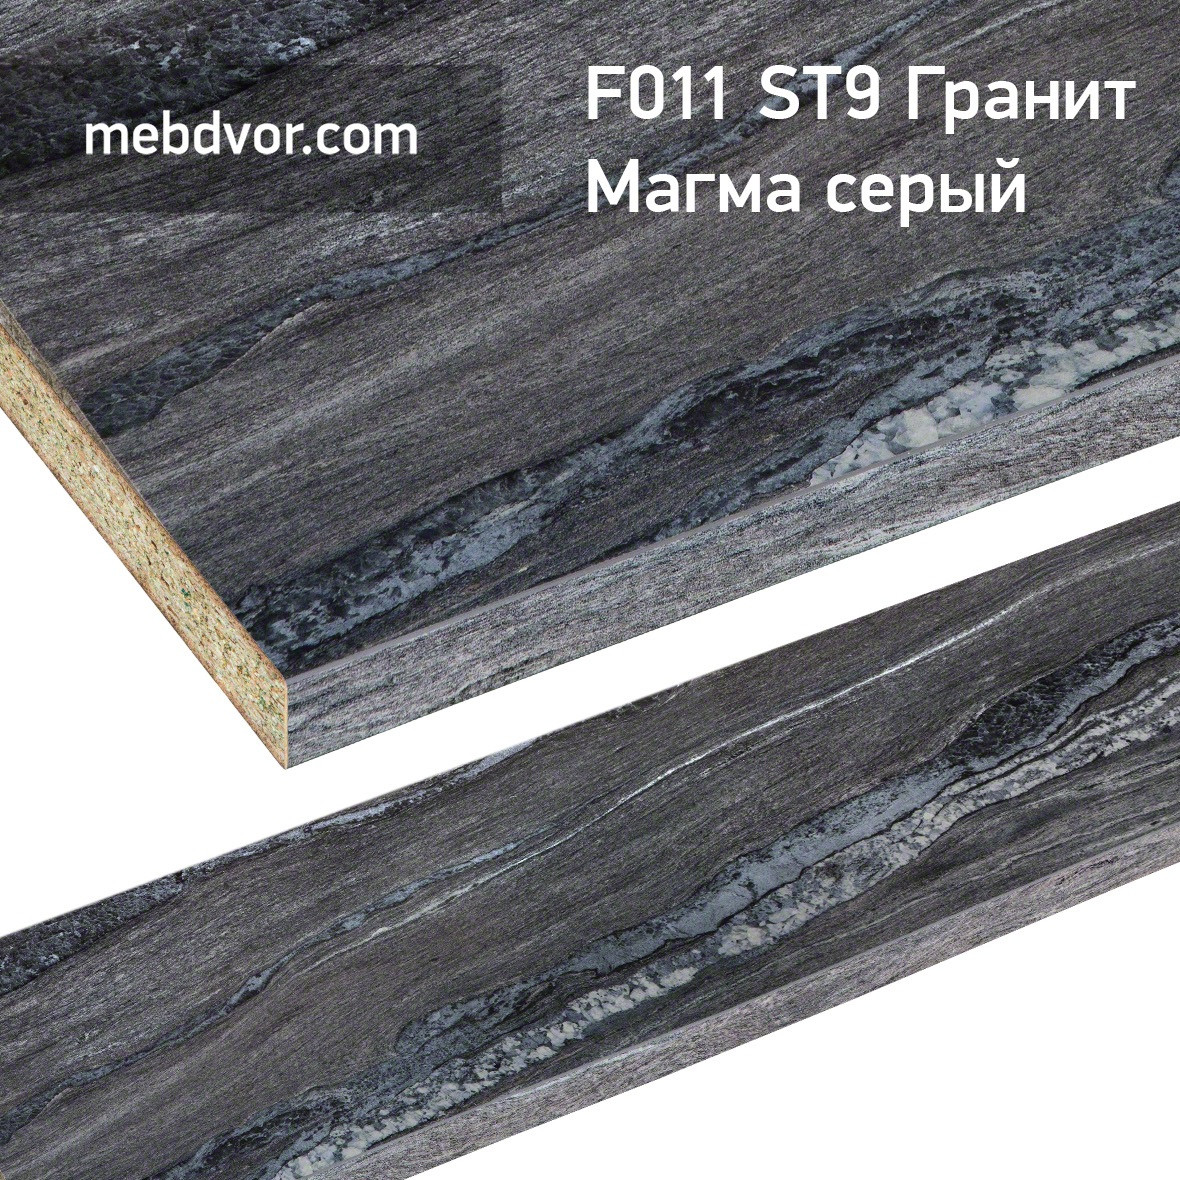 Стеновая панель FS011 B2 Гранит Магма серый  4200mm